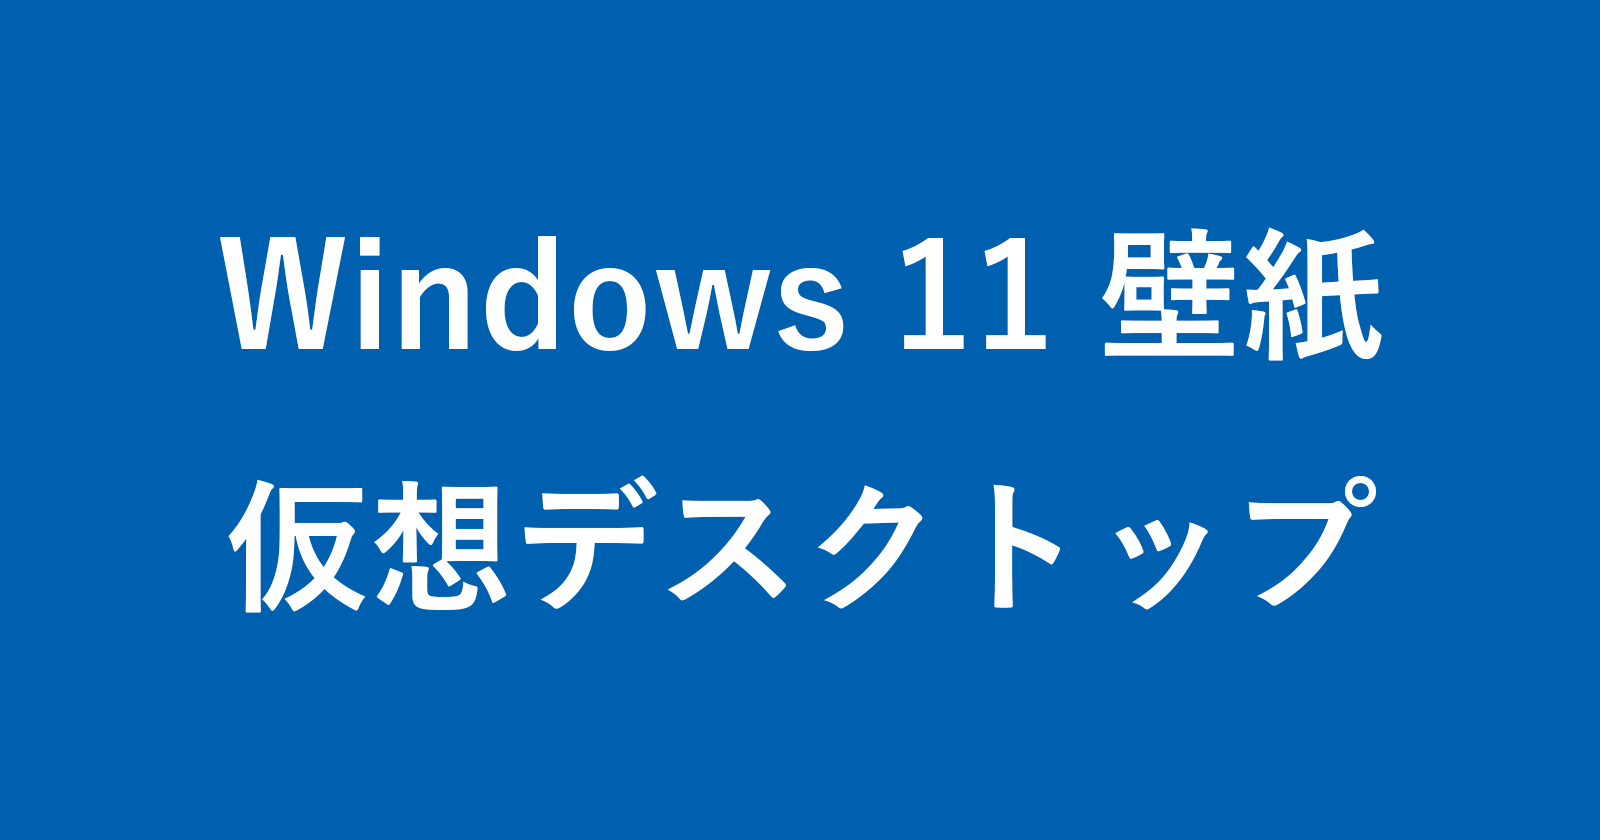 windows 11 virtual desktop wallpaper